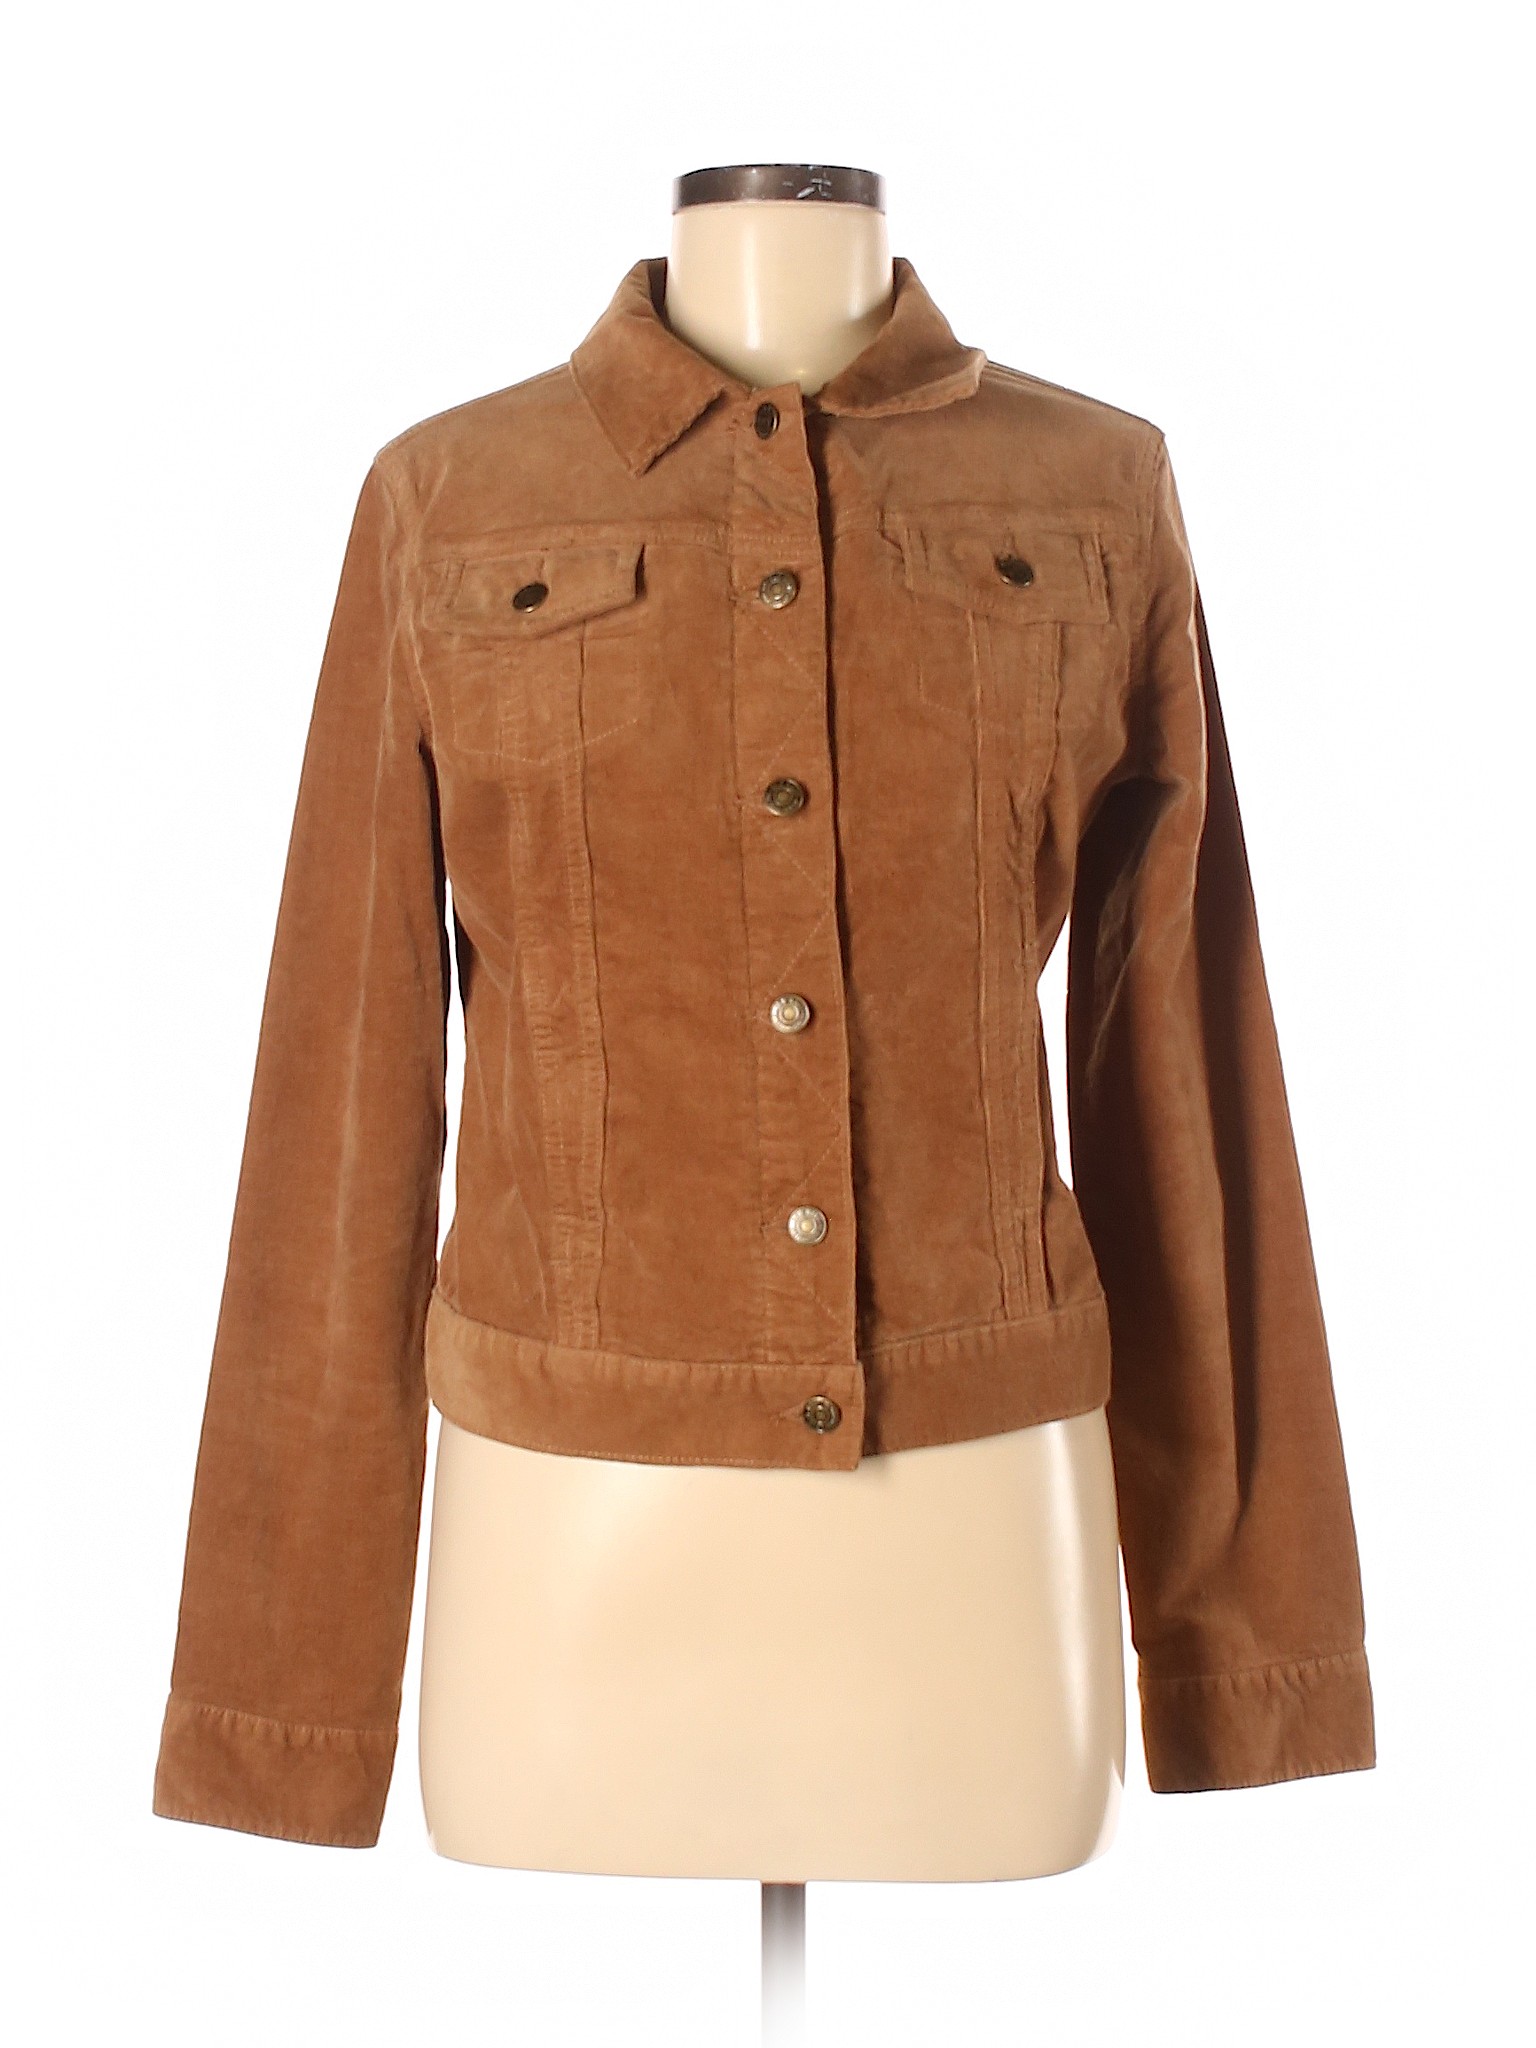 Old Navy Women Brown Jacket M | eBay